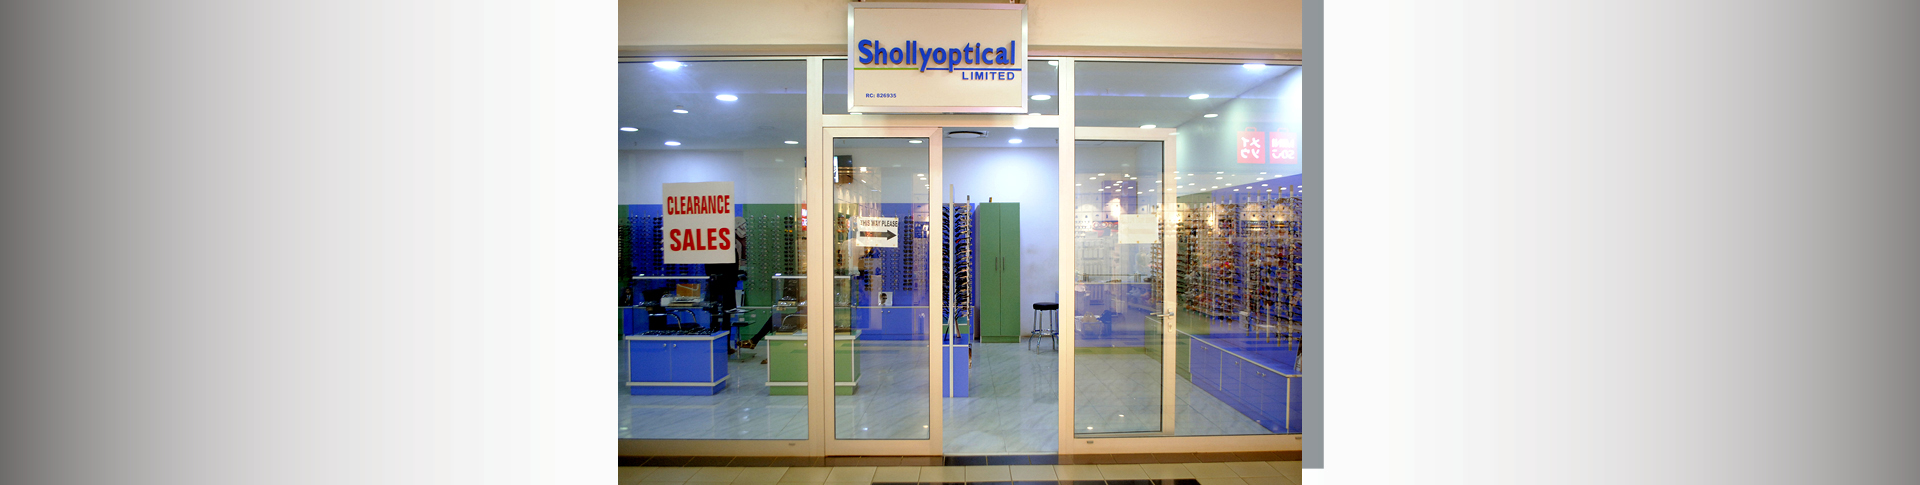 Sholly Optical shop front